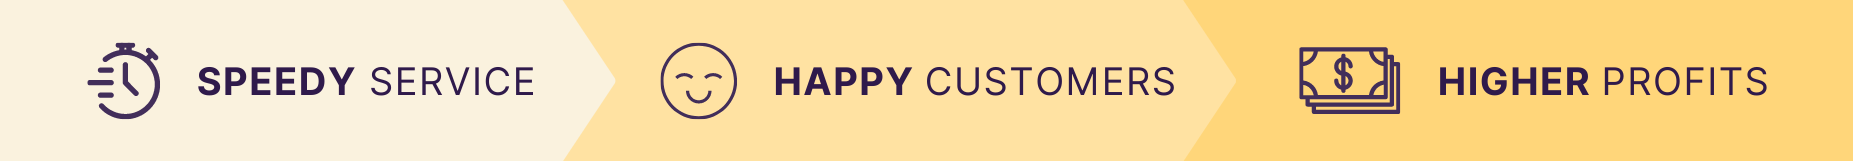 speedy service, happy customers, higher profits